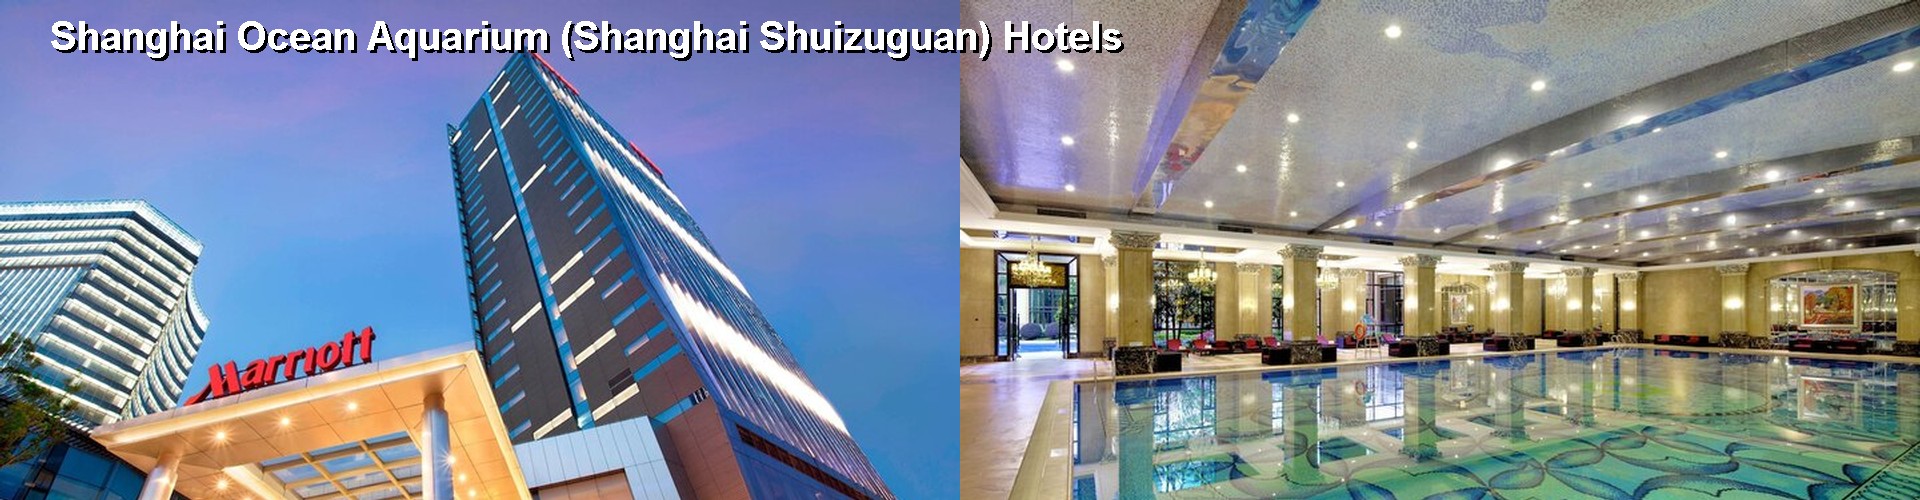 5 Best Hotels near Shanghai Ocean Aquarium (Shanghai Shuizuguan)